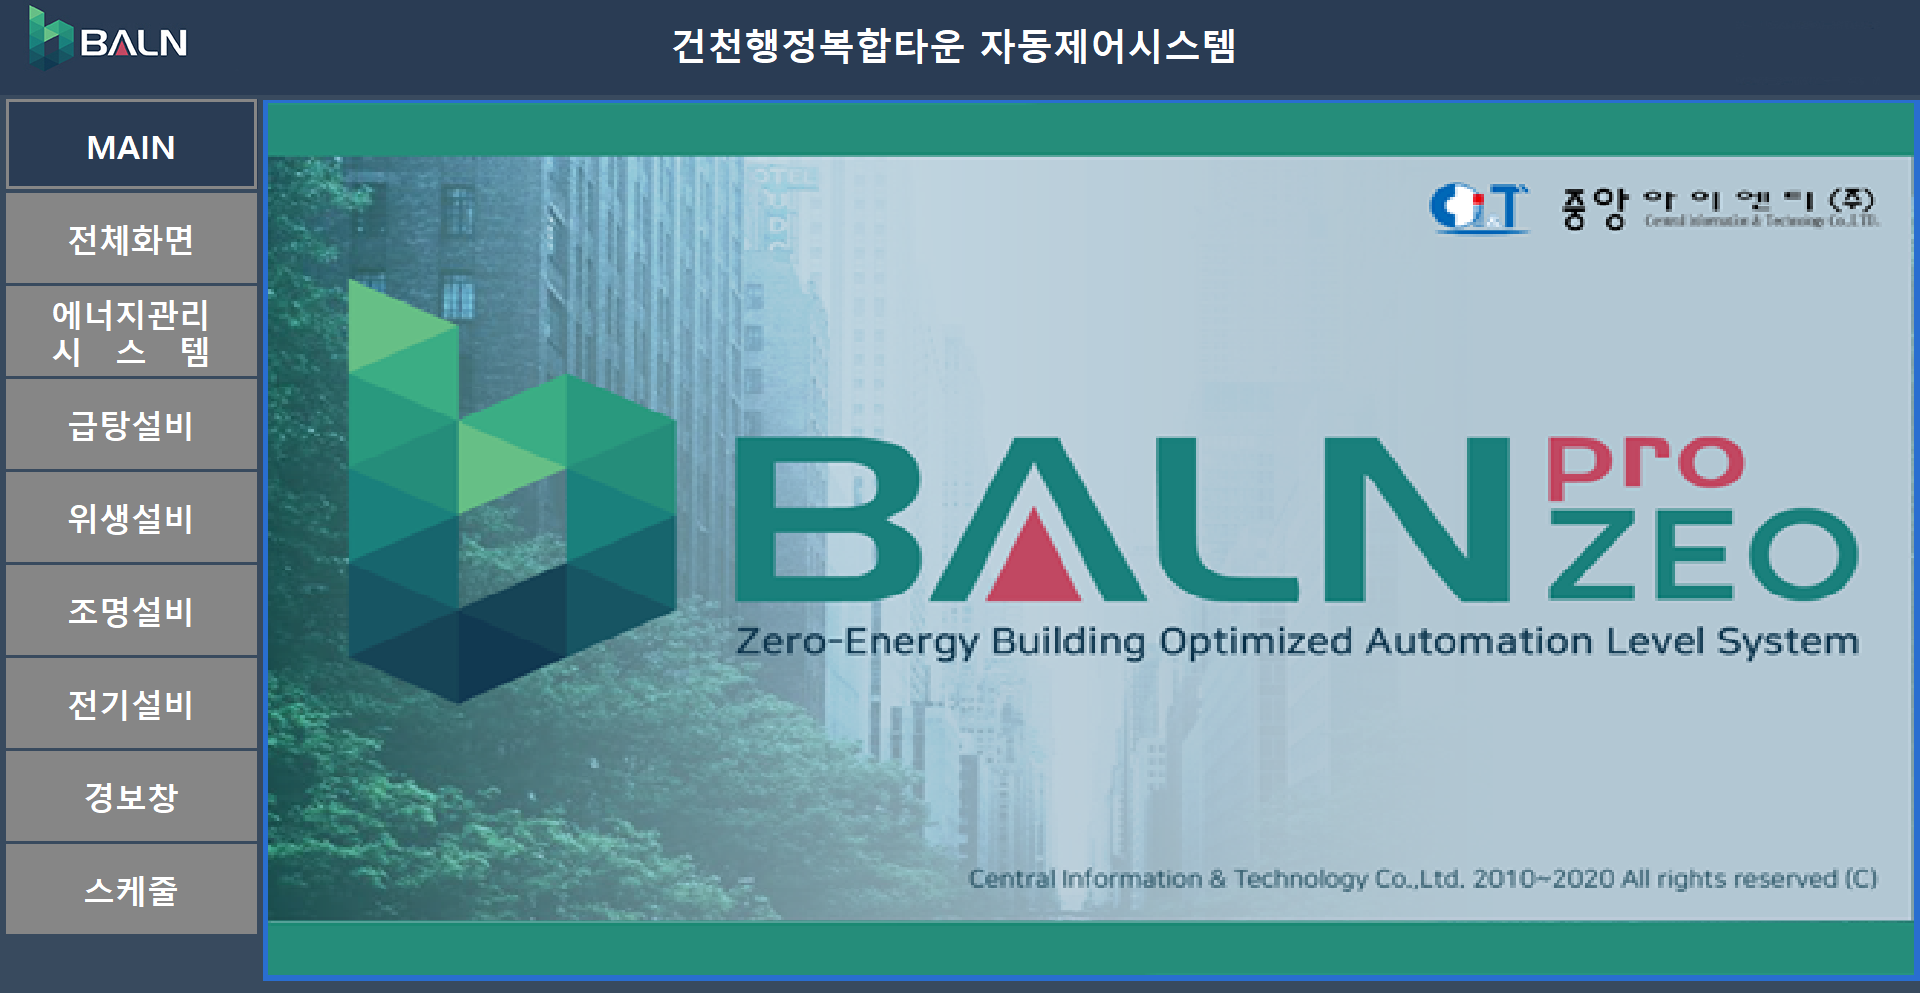 1. BALNpro-ZEOv3.2 MAIN 화면